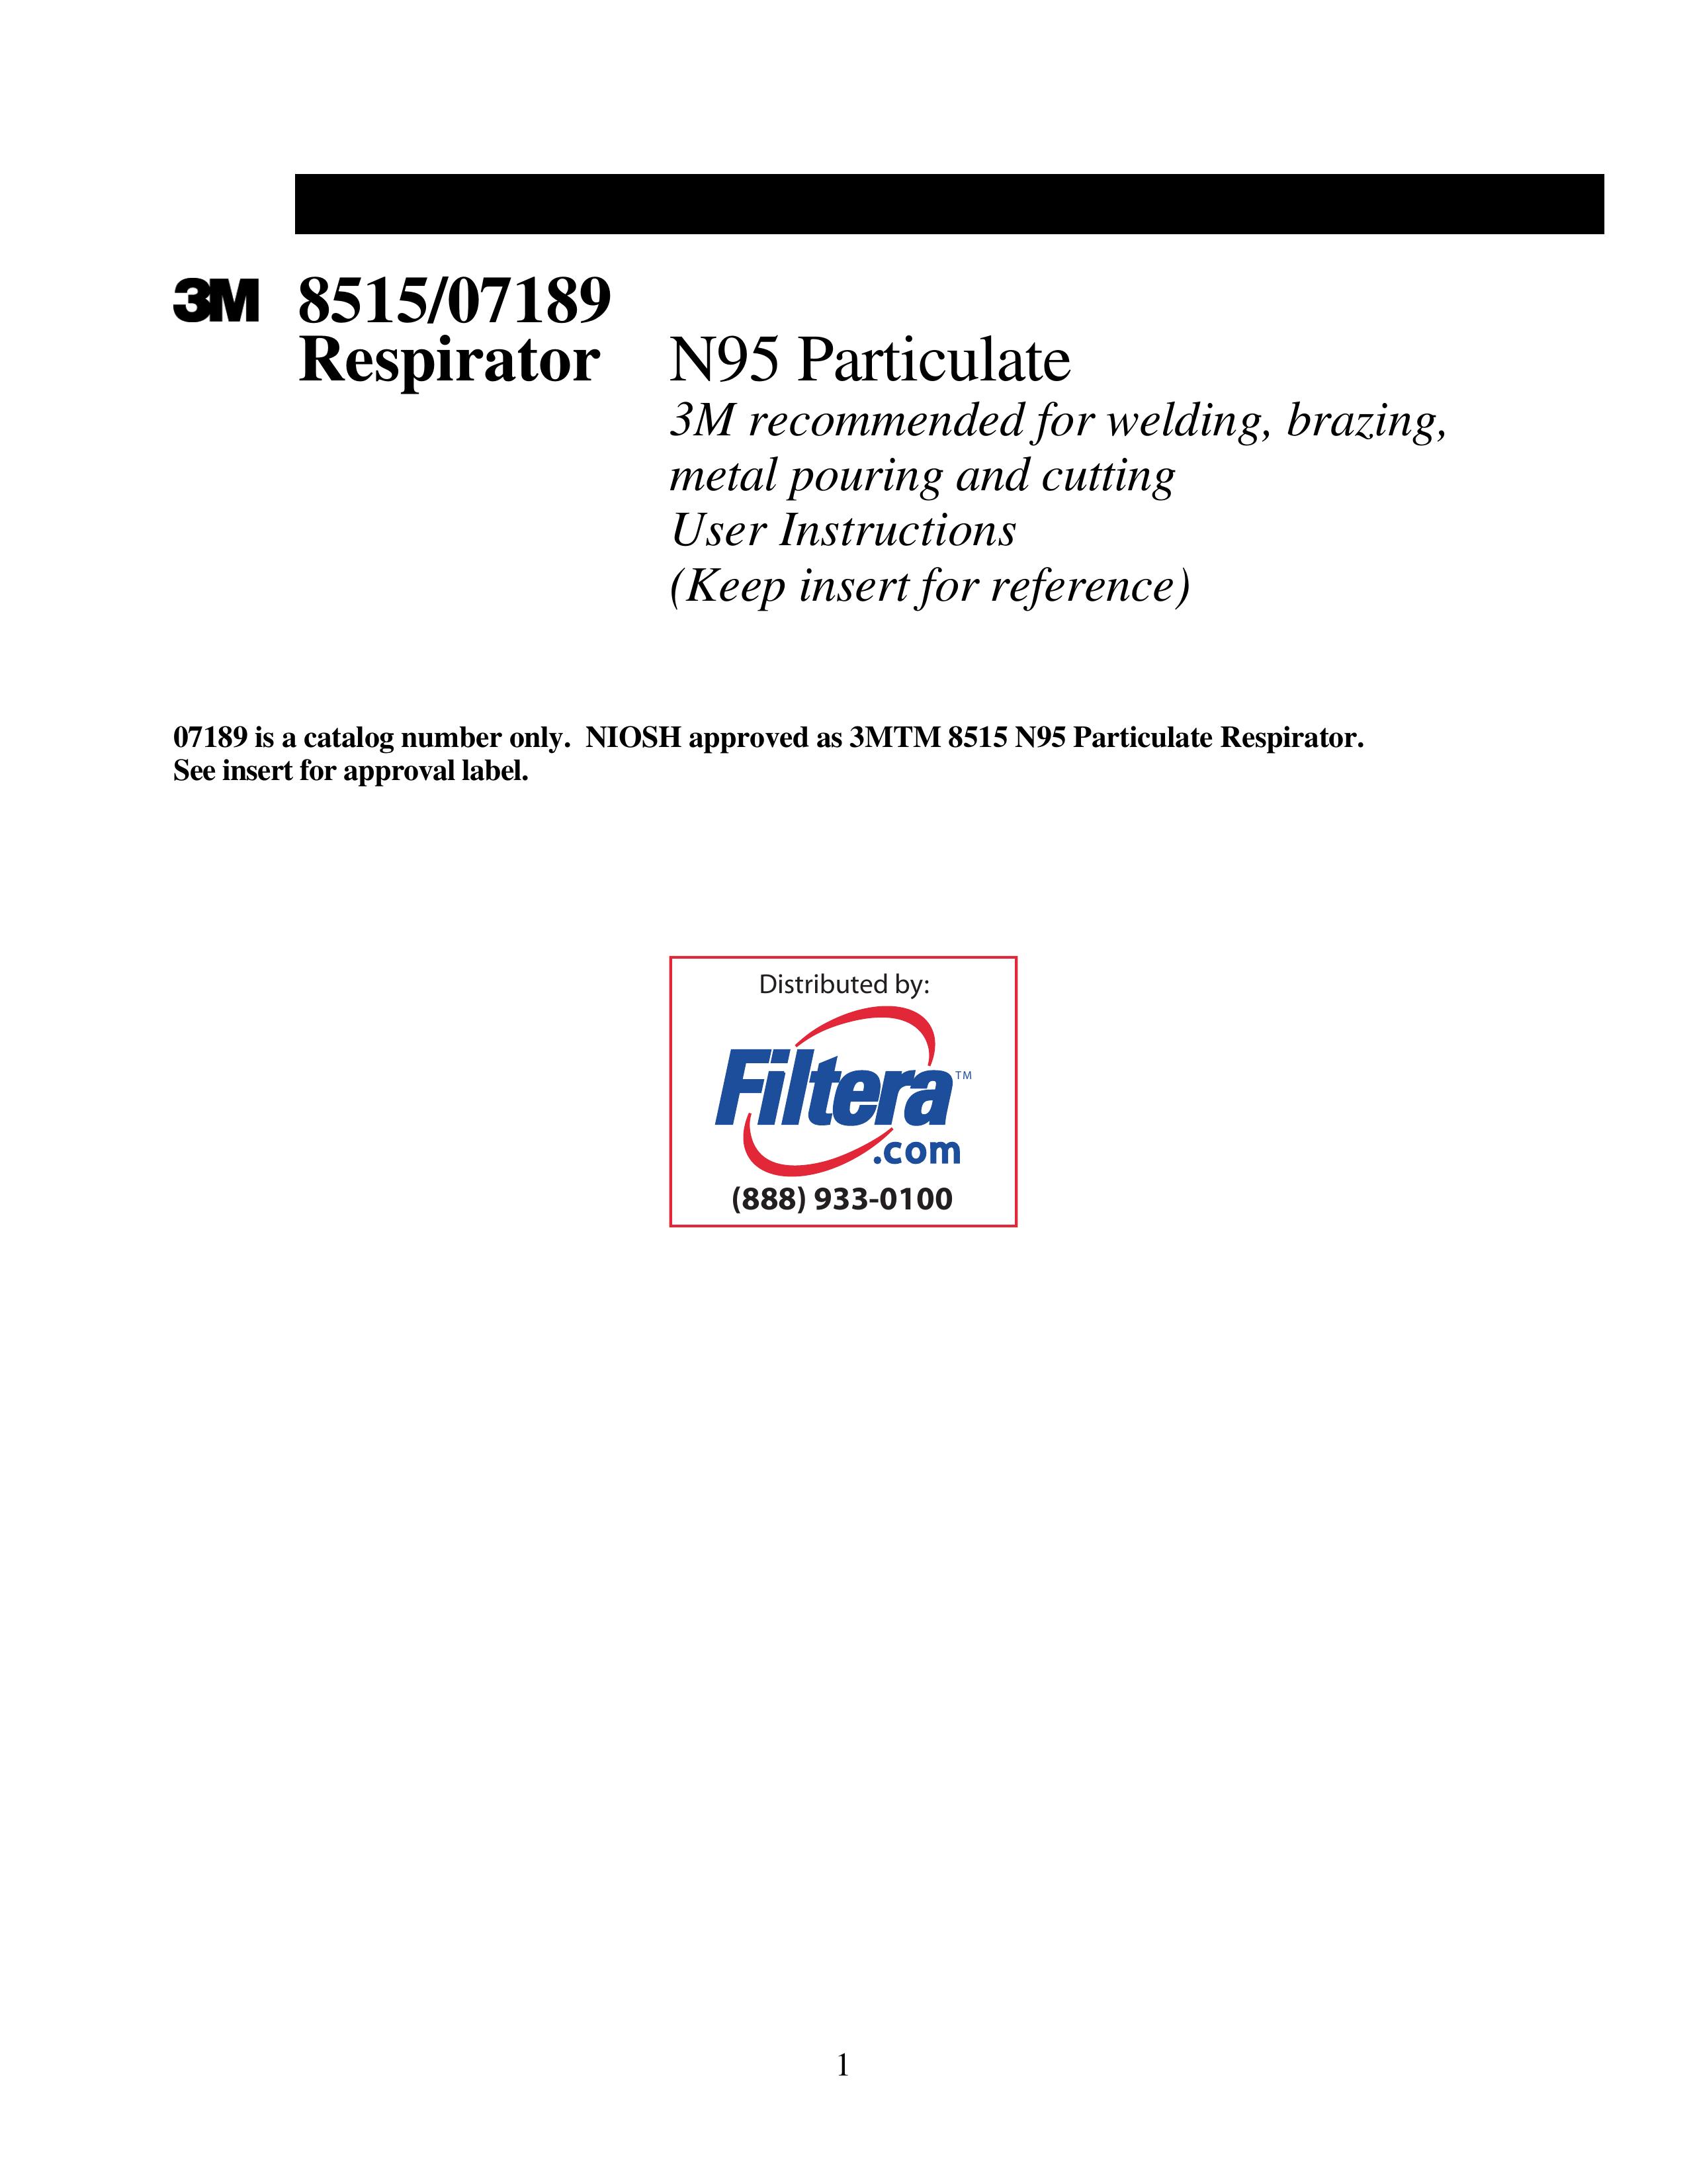 Filtera 8515/07189 Oxygen Equipment User Manual